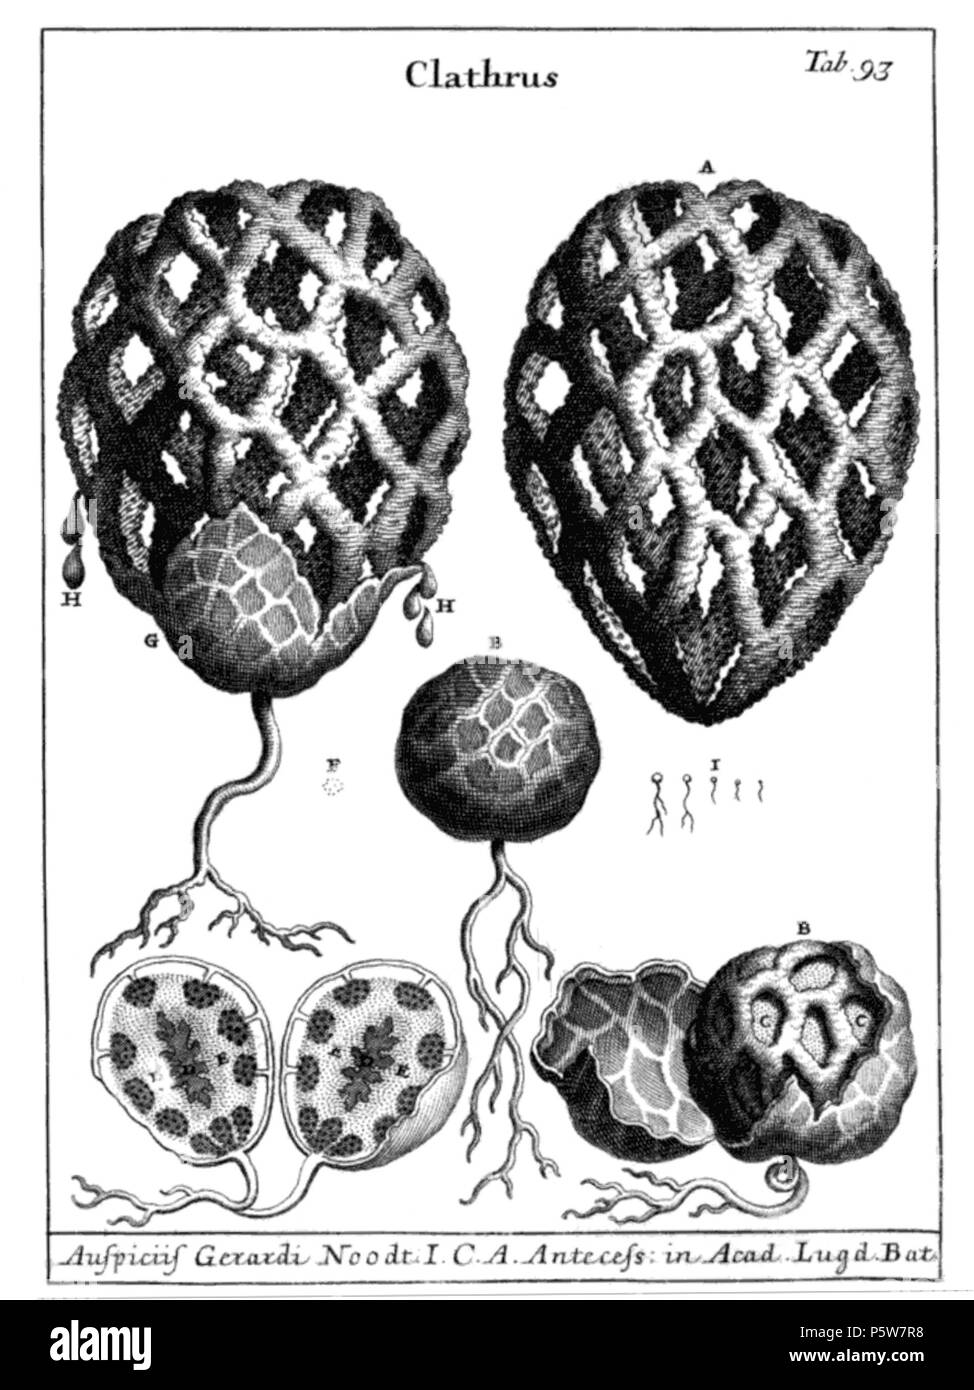 N/A. English: Drawings of the fungus Clathrus ruber. 1729. Pier Antonio Micheli (1679-1737) 351 Clathrus ruber by Micheli 1729 Stock Photo